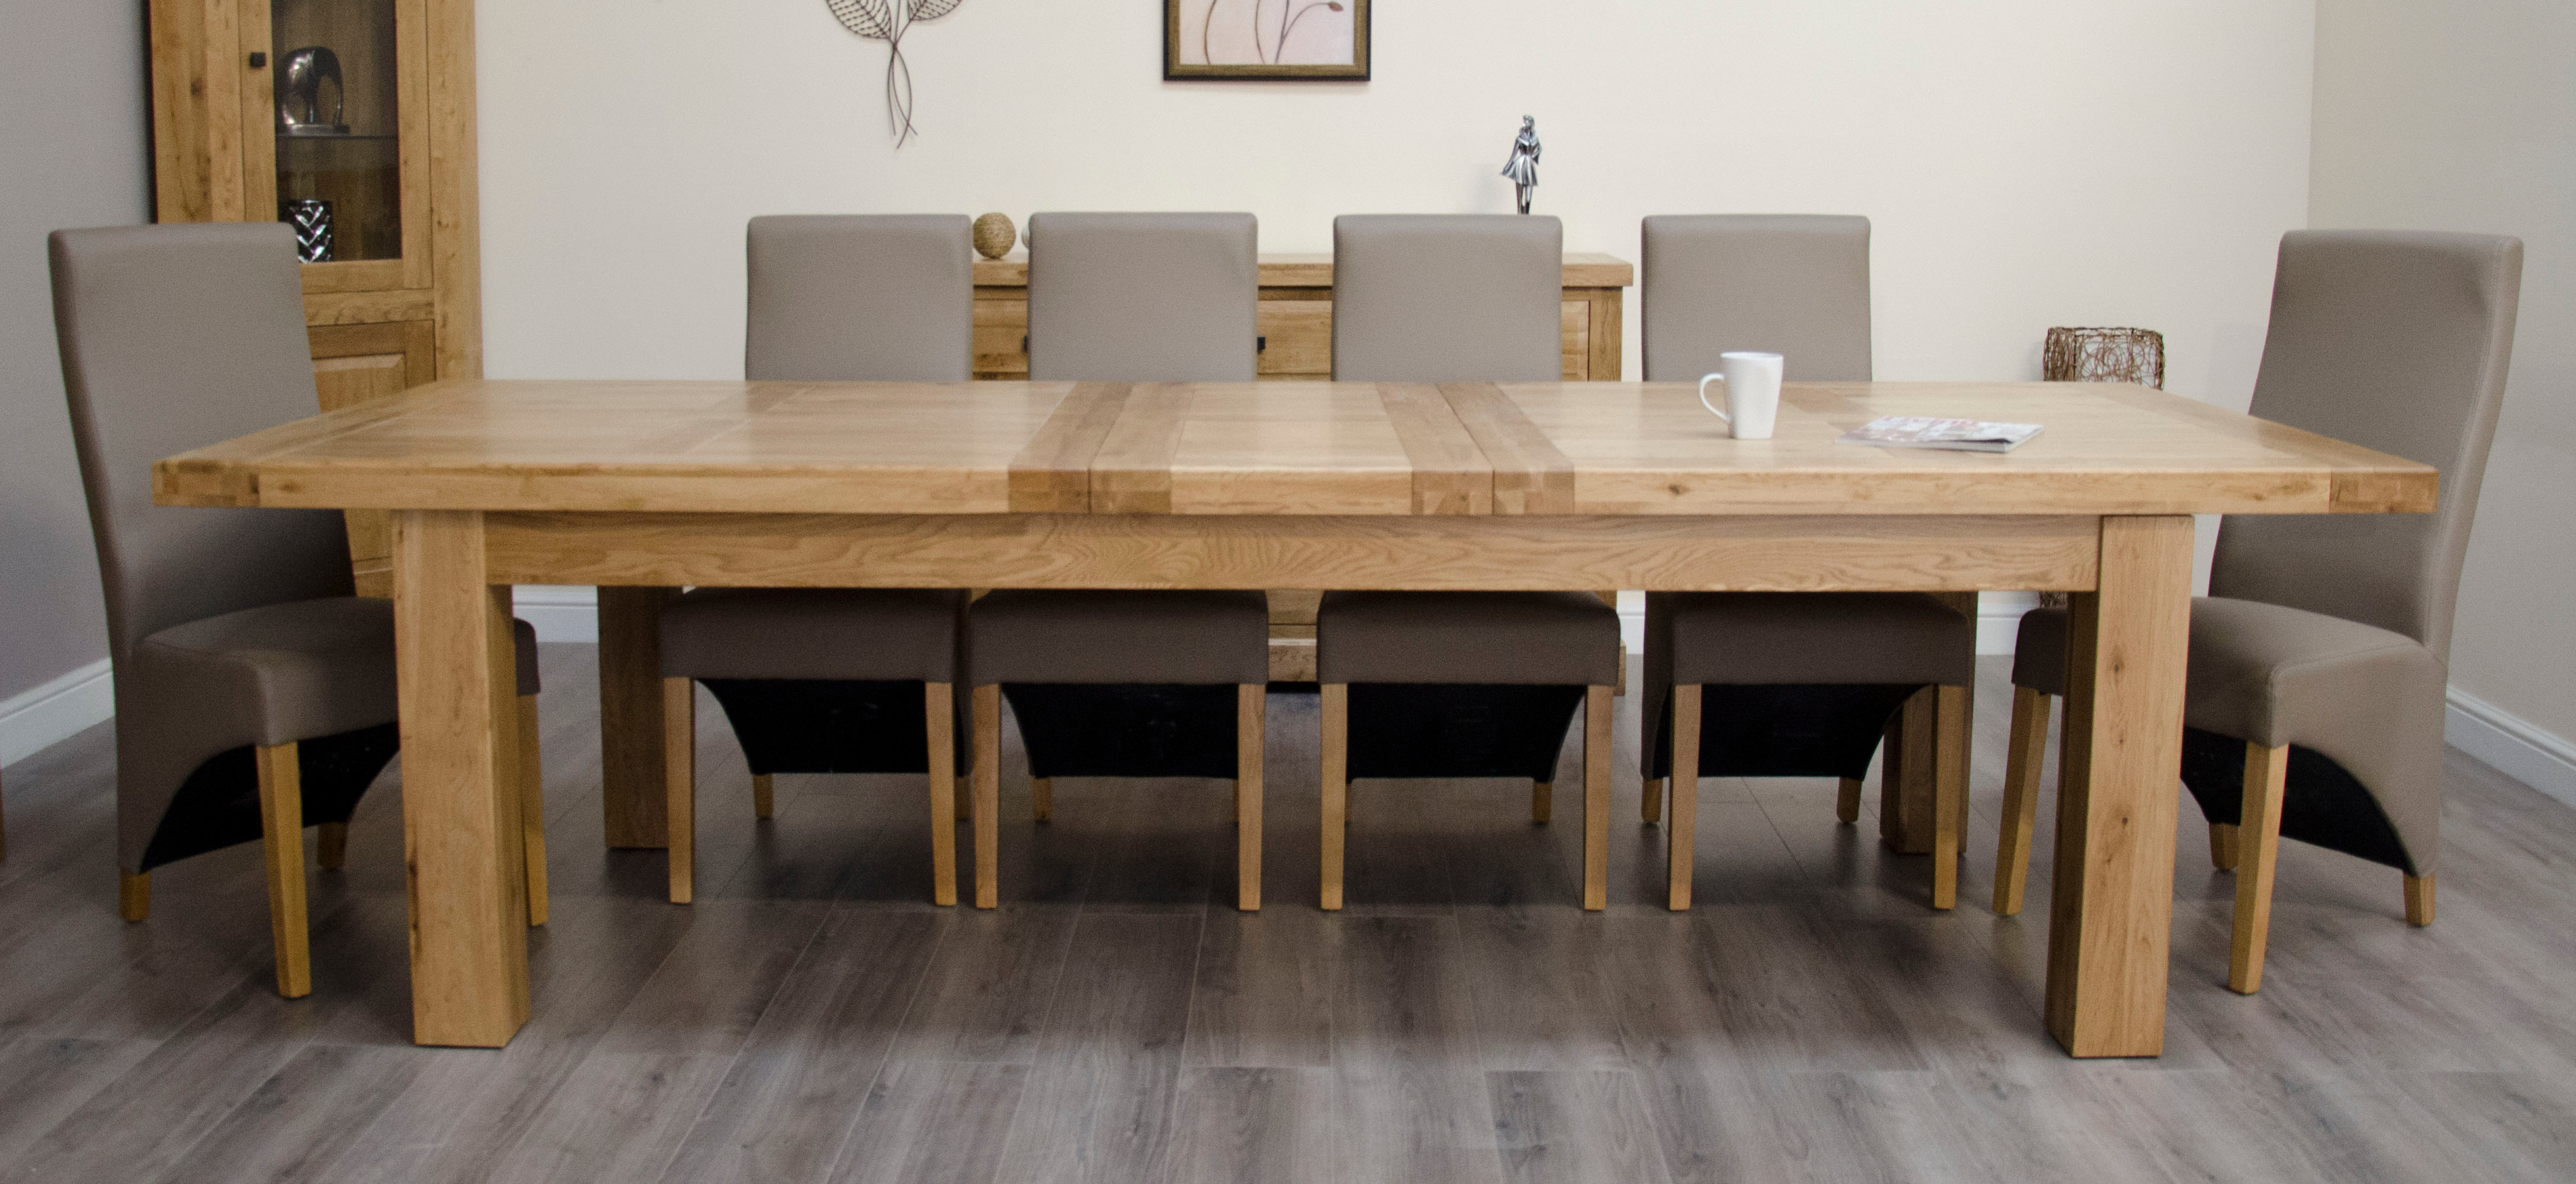 solid oak wood kitchen table